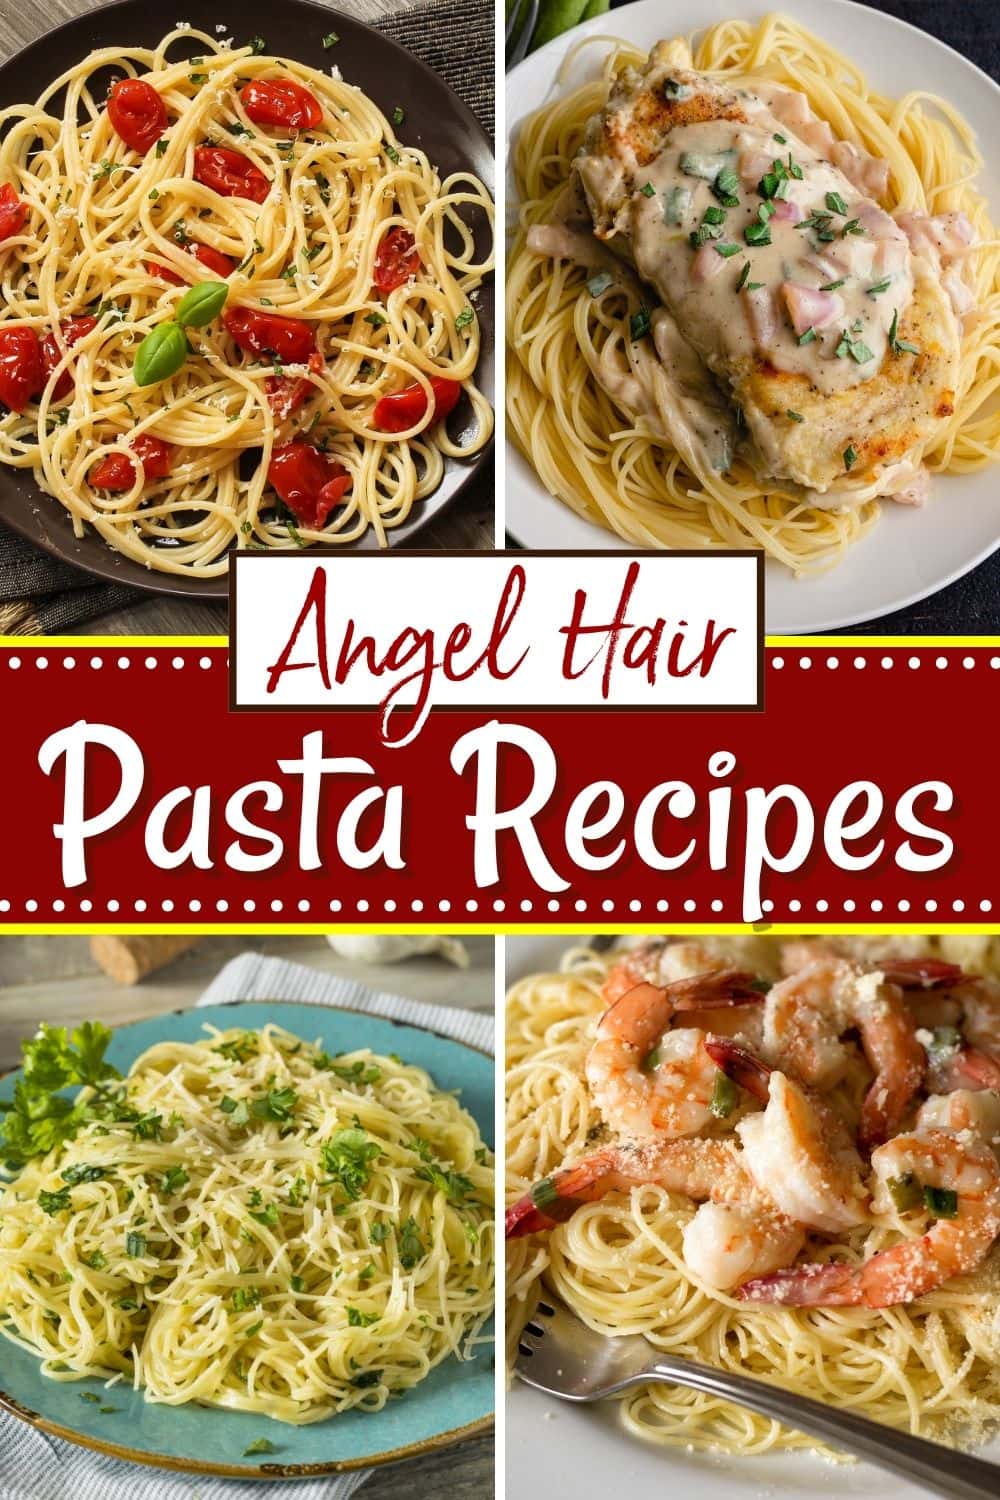 25 Best Angel Hair Pasta Recipes For Dinner - Insanely Good